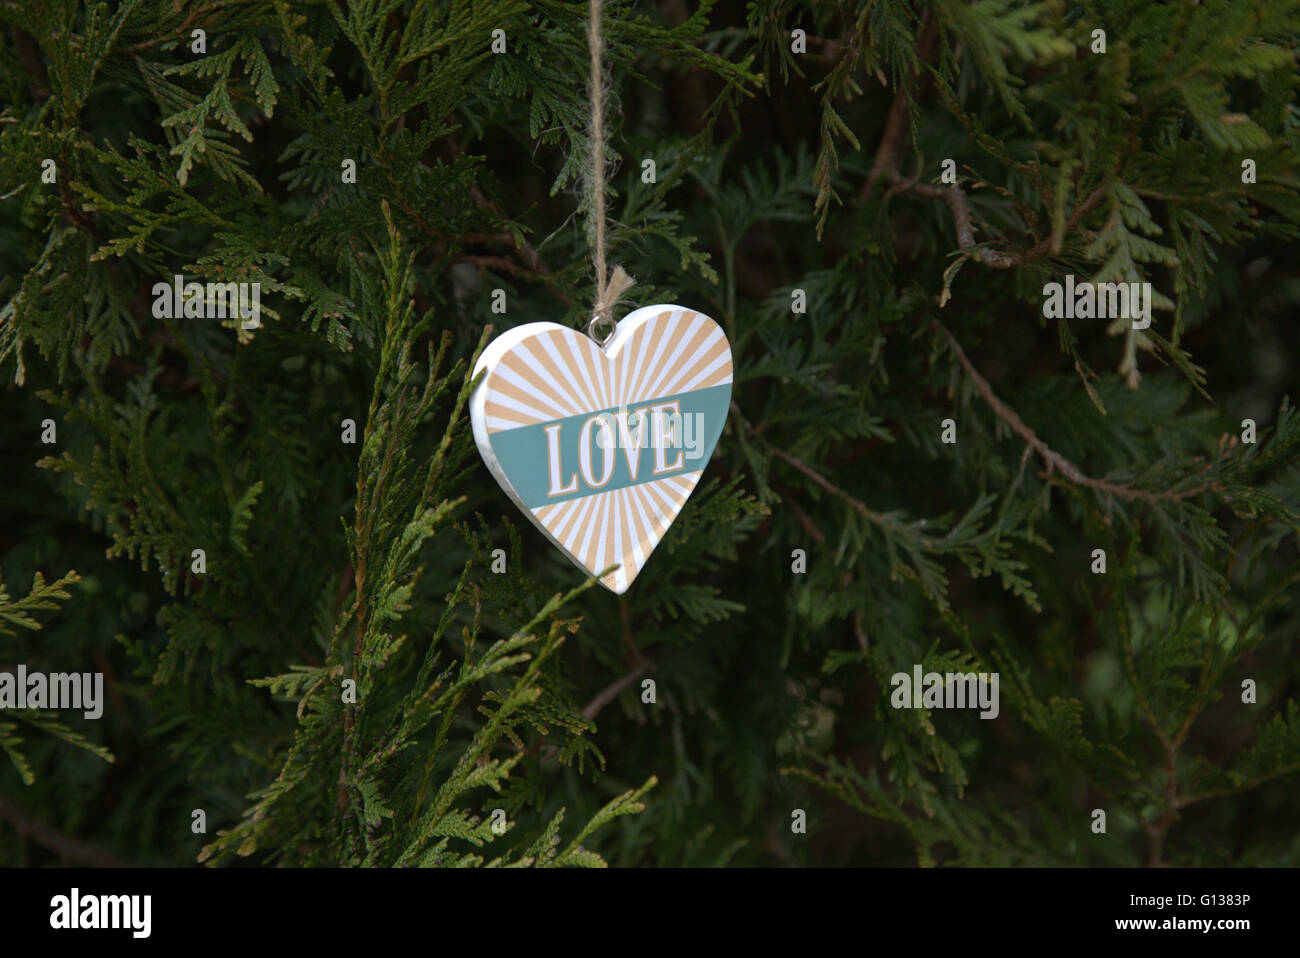 love heart in a pine bush, Glasgow Kelvingrove park Glasgow,Scotland,U.K. Stock Photo